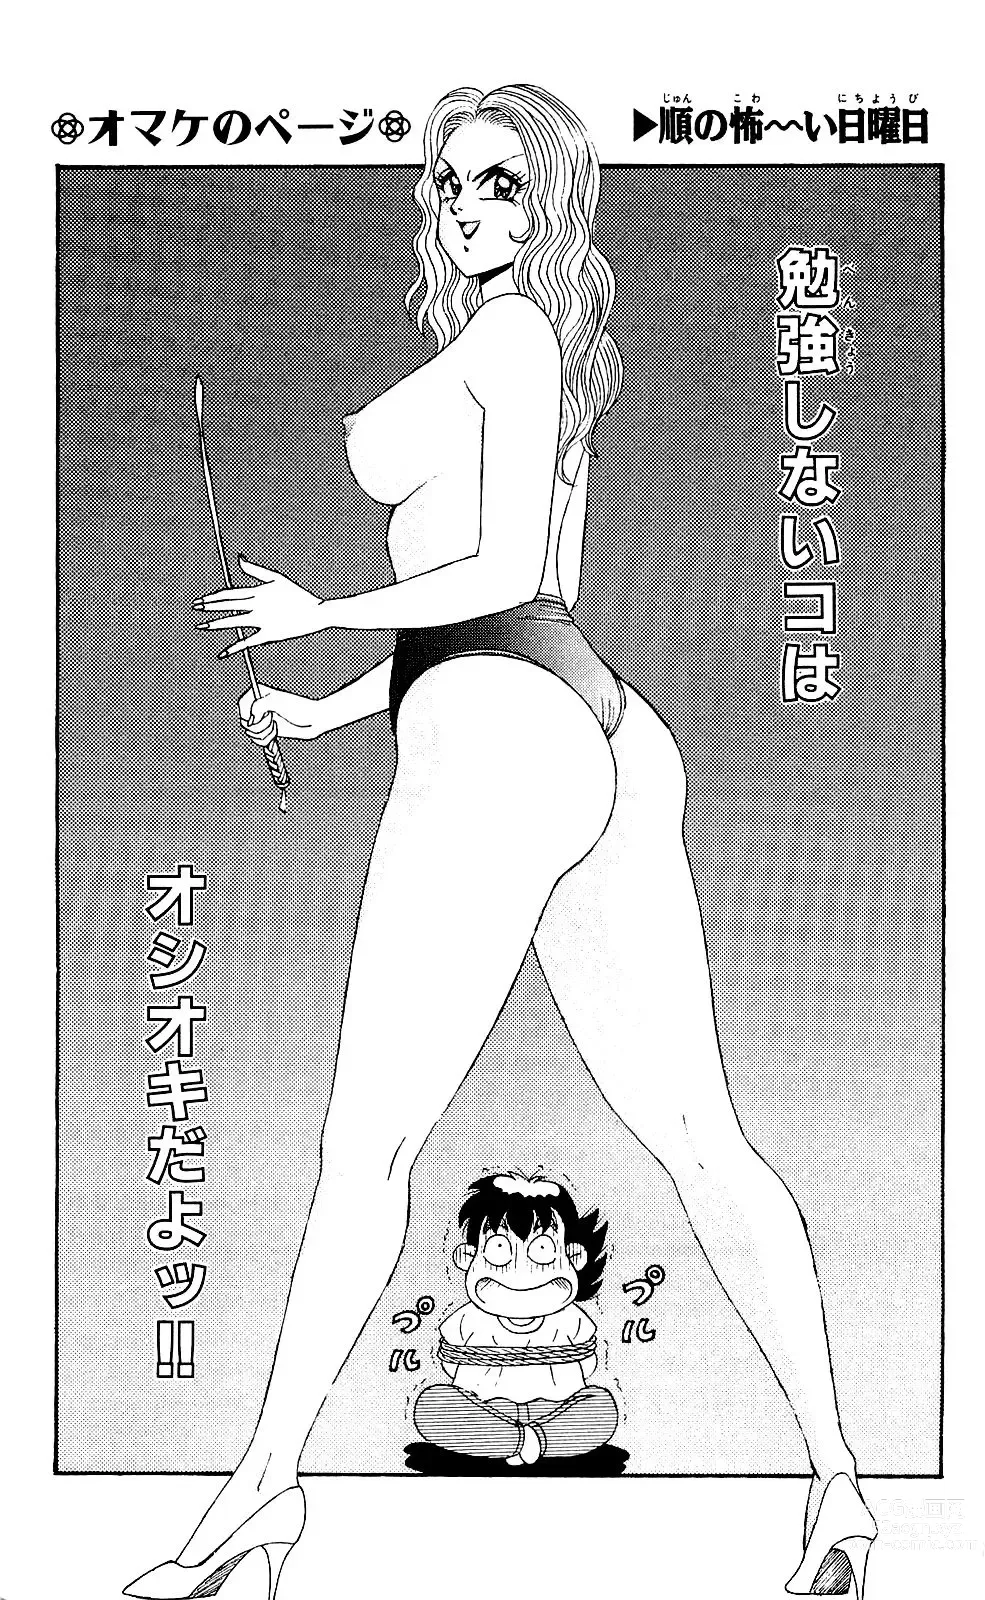 Page 189 of manga Orette Piyoritan Vol. 3